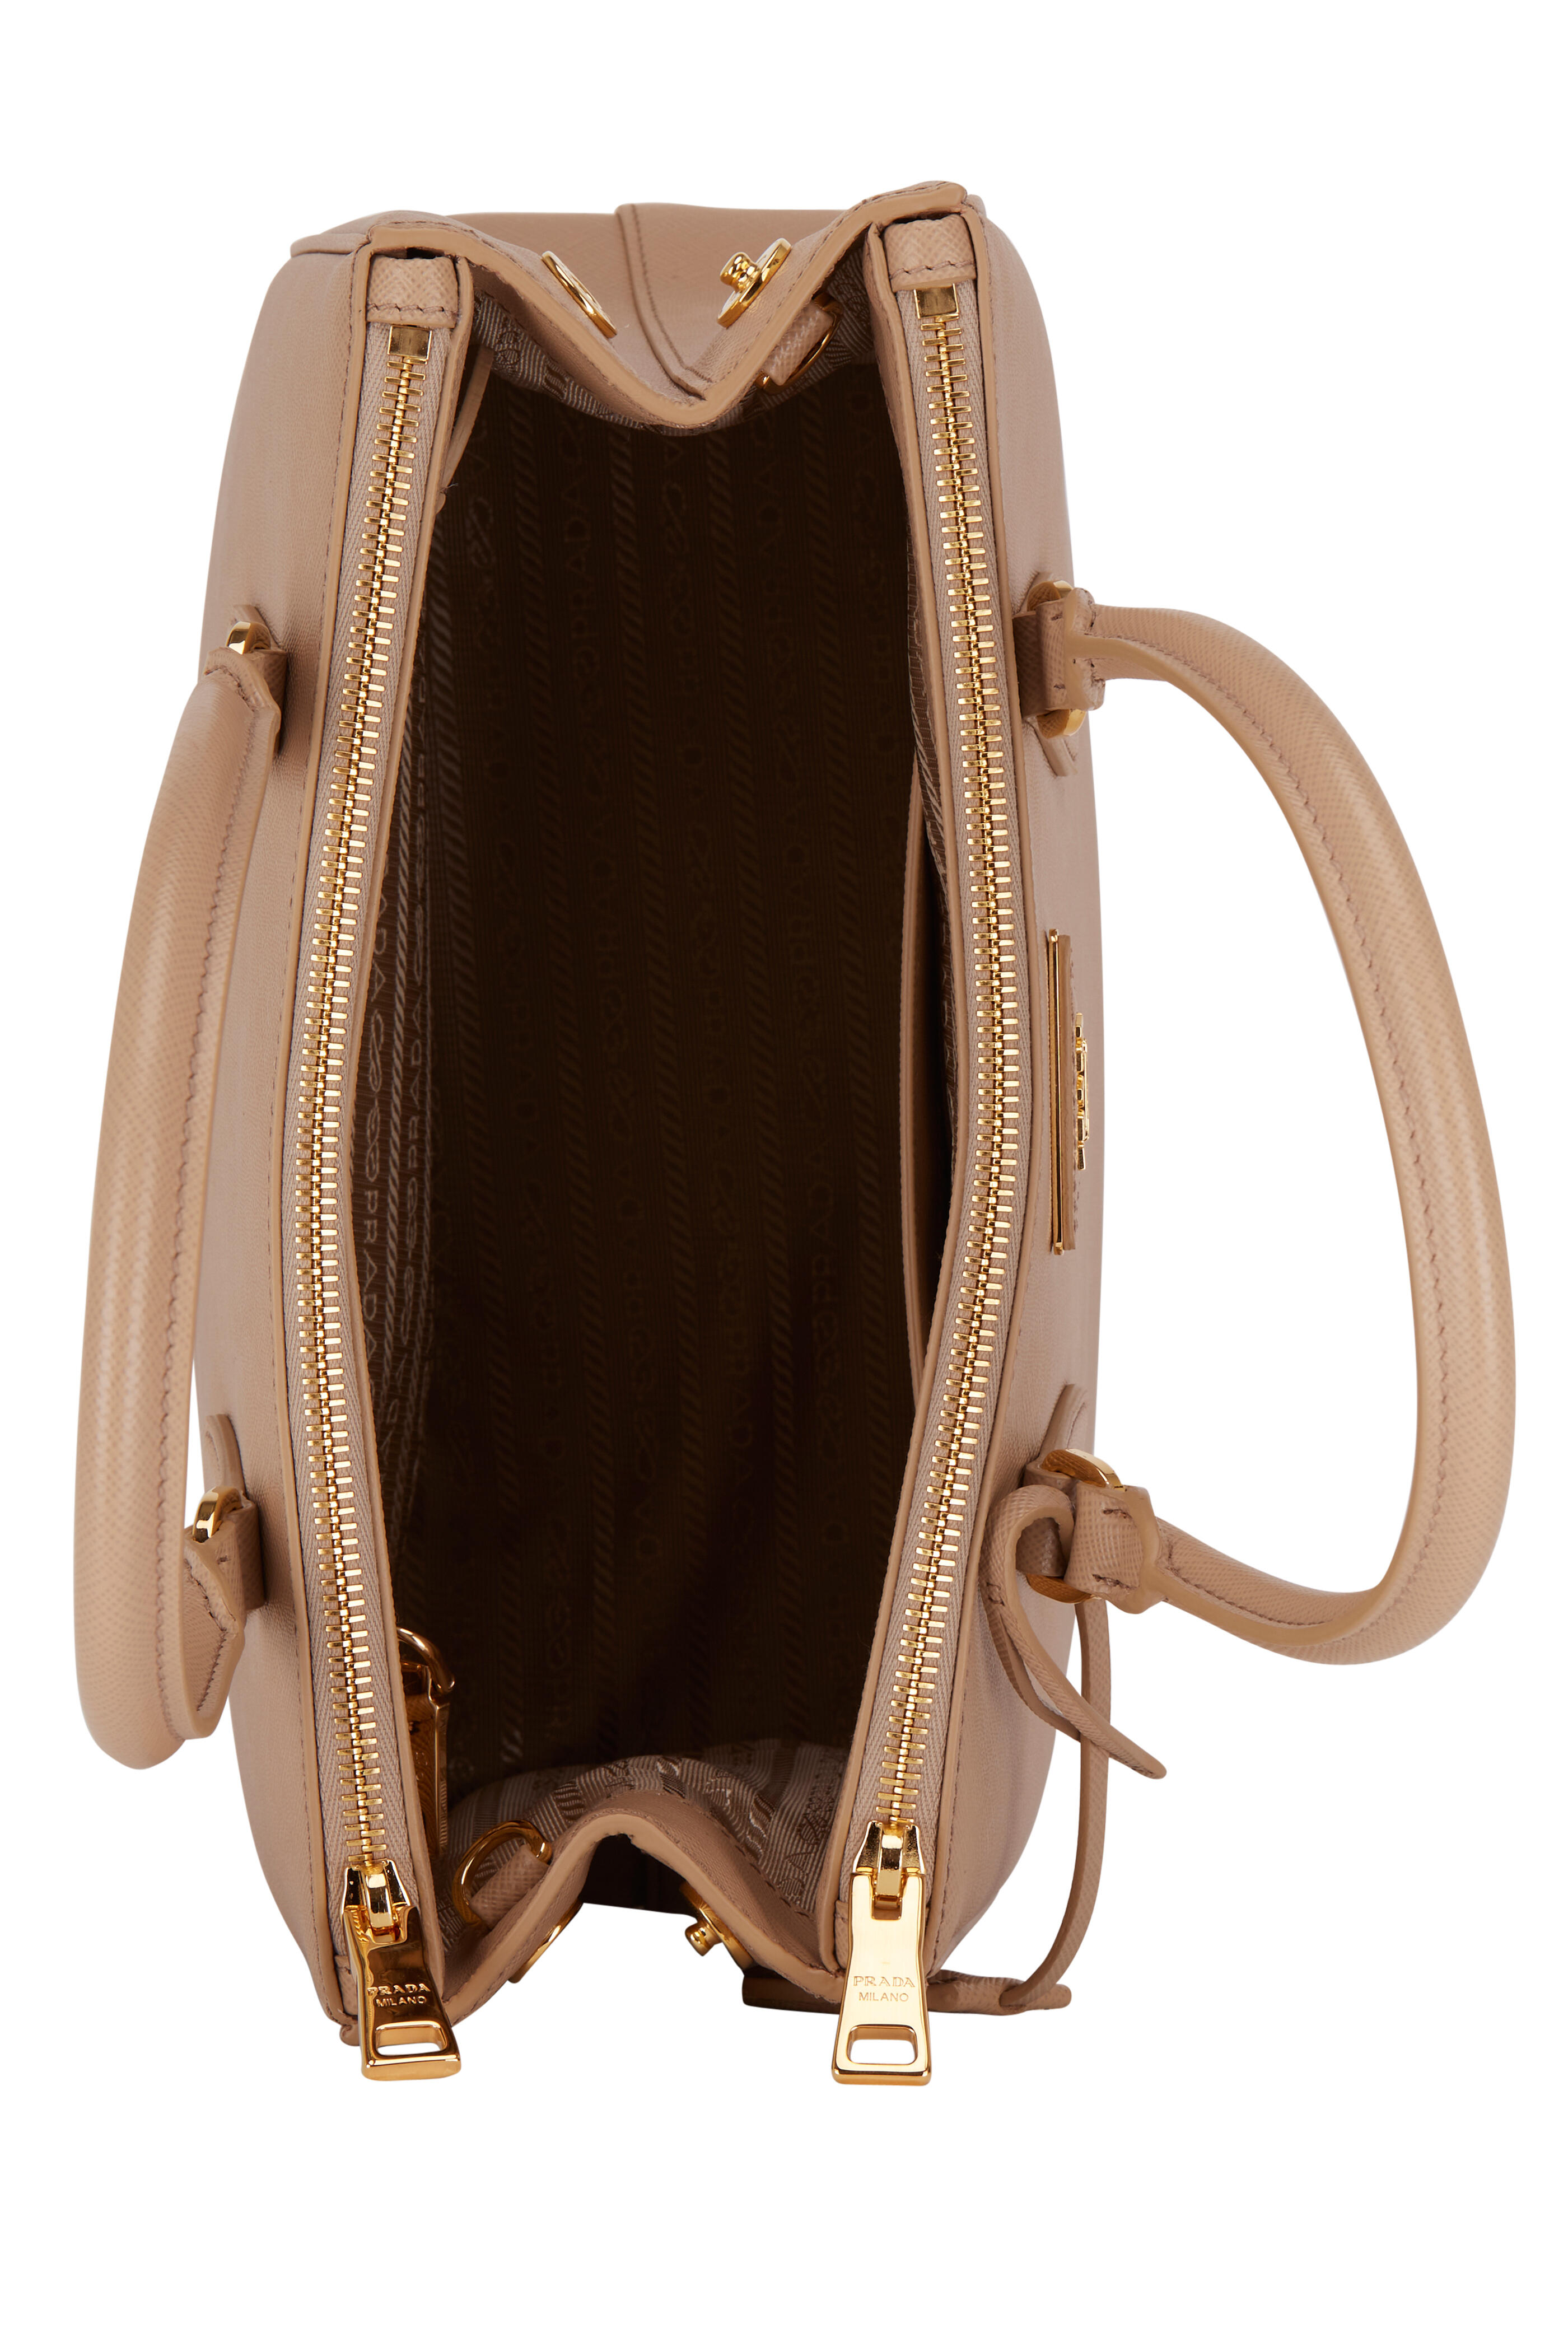 Prada Saffiano Lux Medium Satchel Handbag